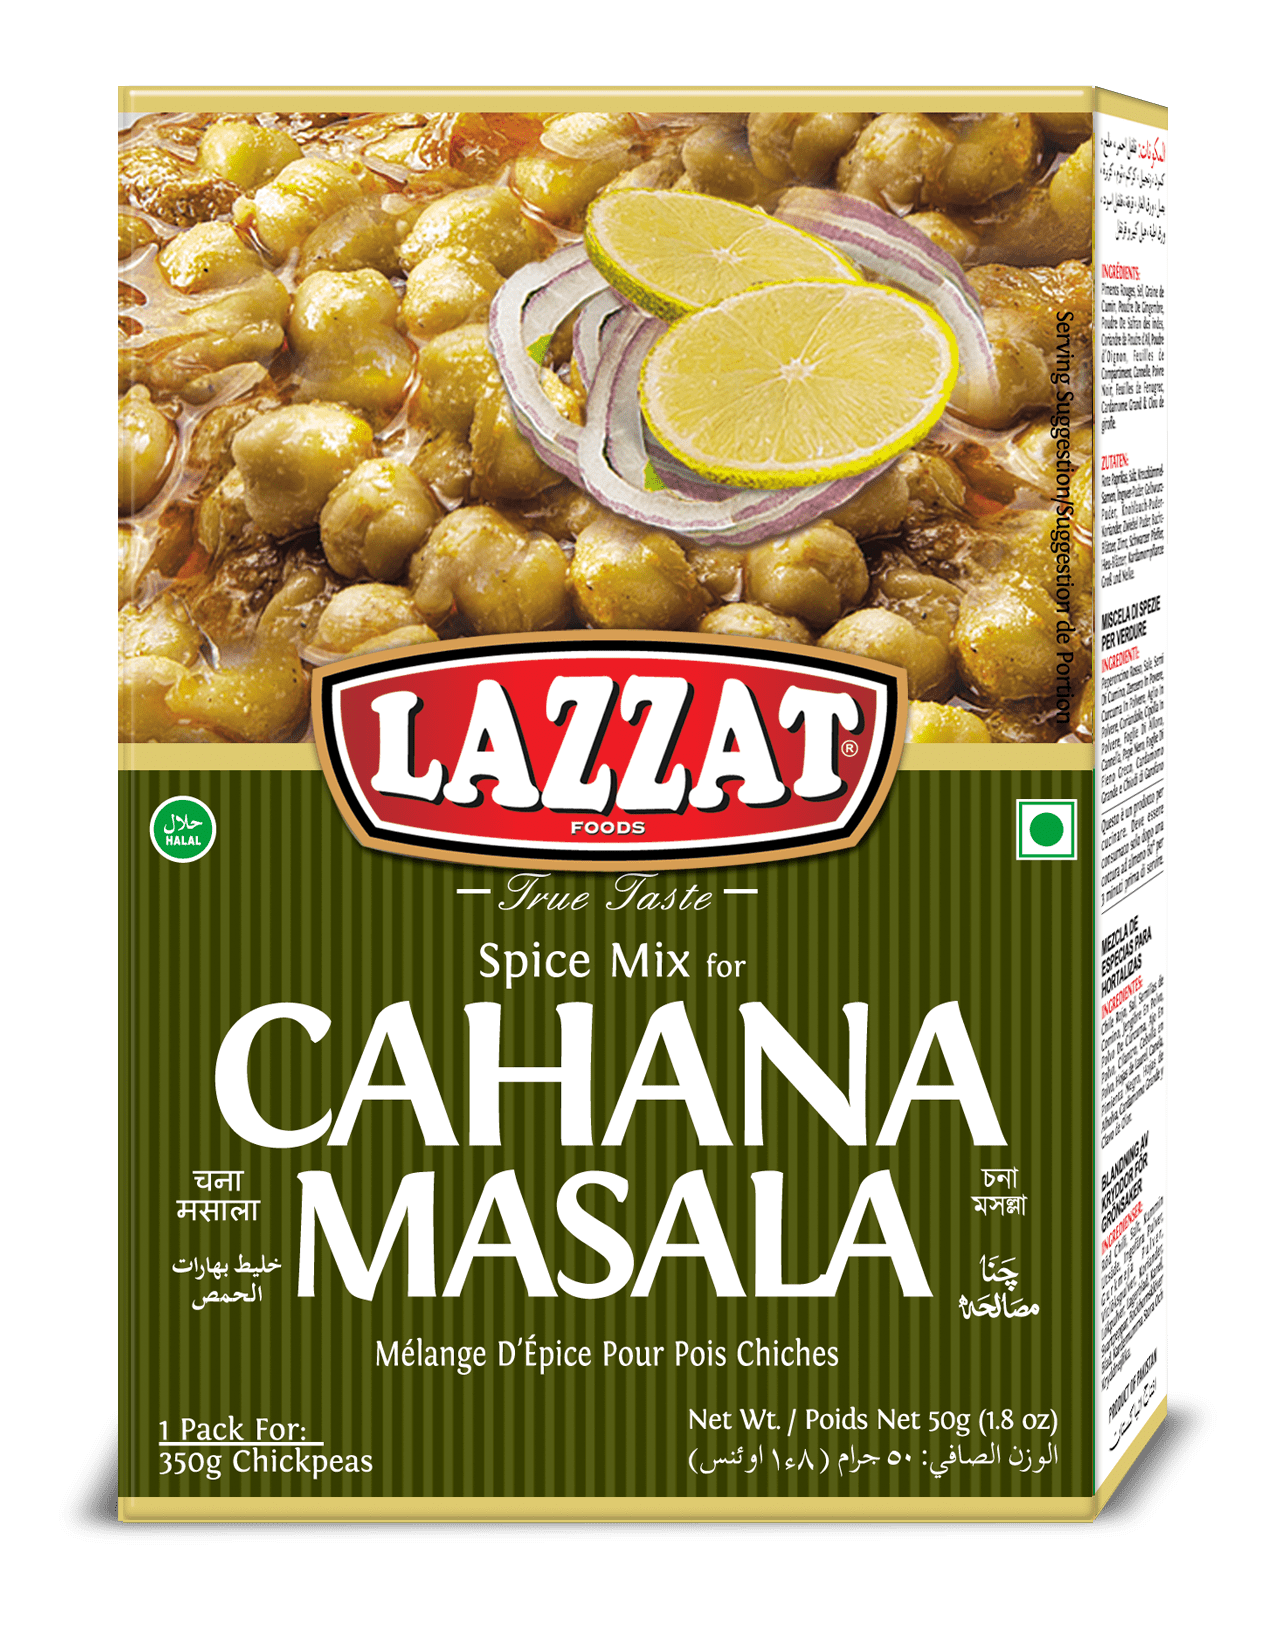 Chana Masala Recipe: A Healthy And Flavorful Vegetarian Indian Dish